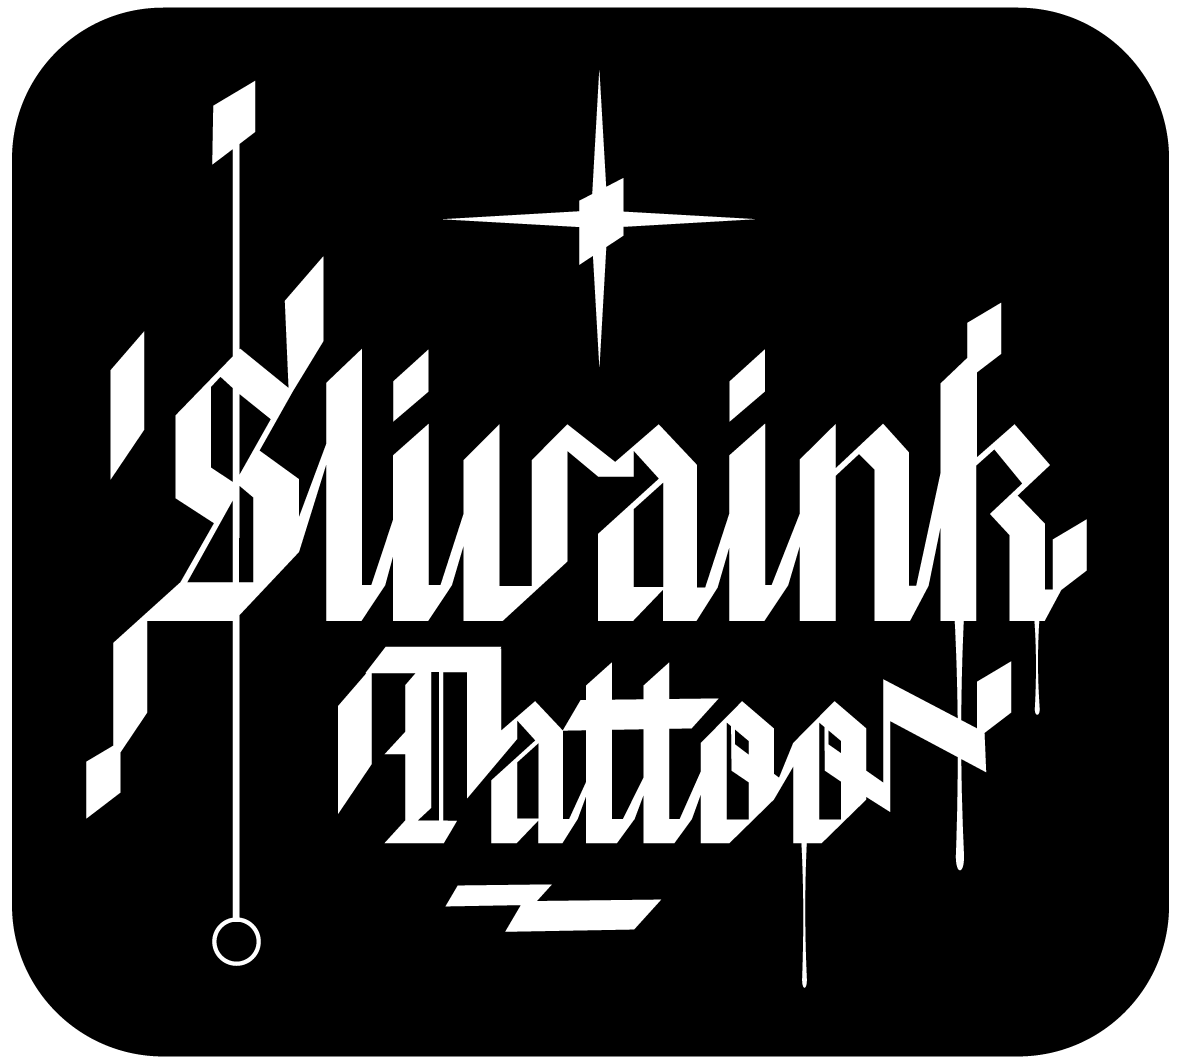 slivaink_tattoo_logo-01